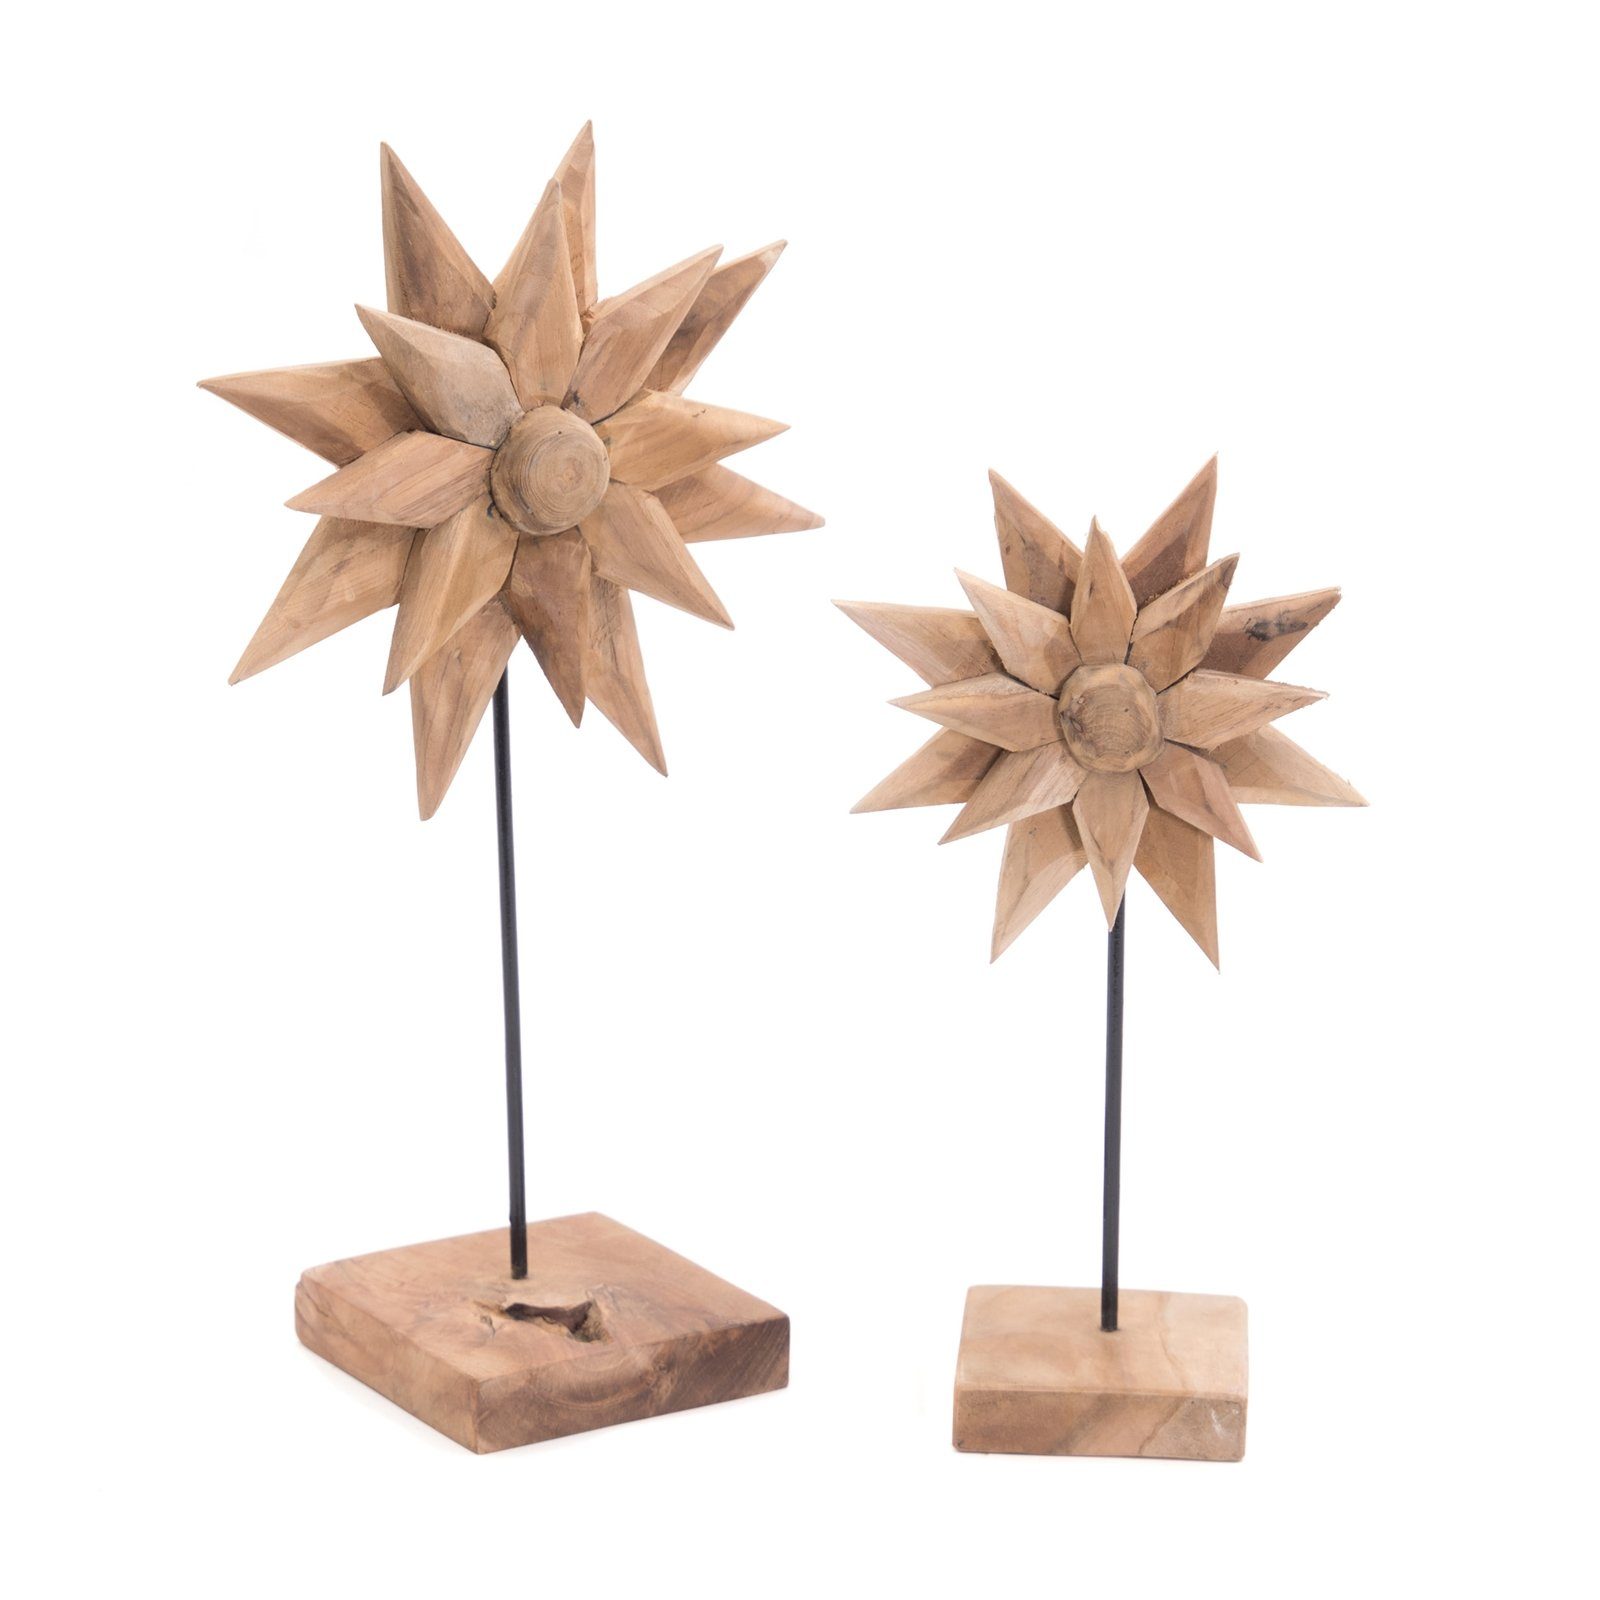 CREEDWOOD Skulptur TEAK SKULPTUR "SUNFLOWER", 2-teilig, Holz Aufsteller Blume | Skulpturen